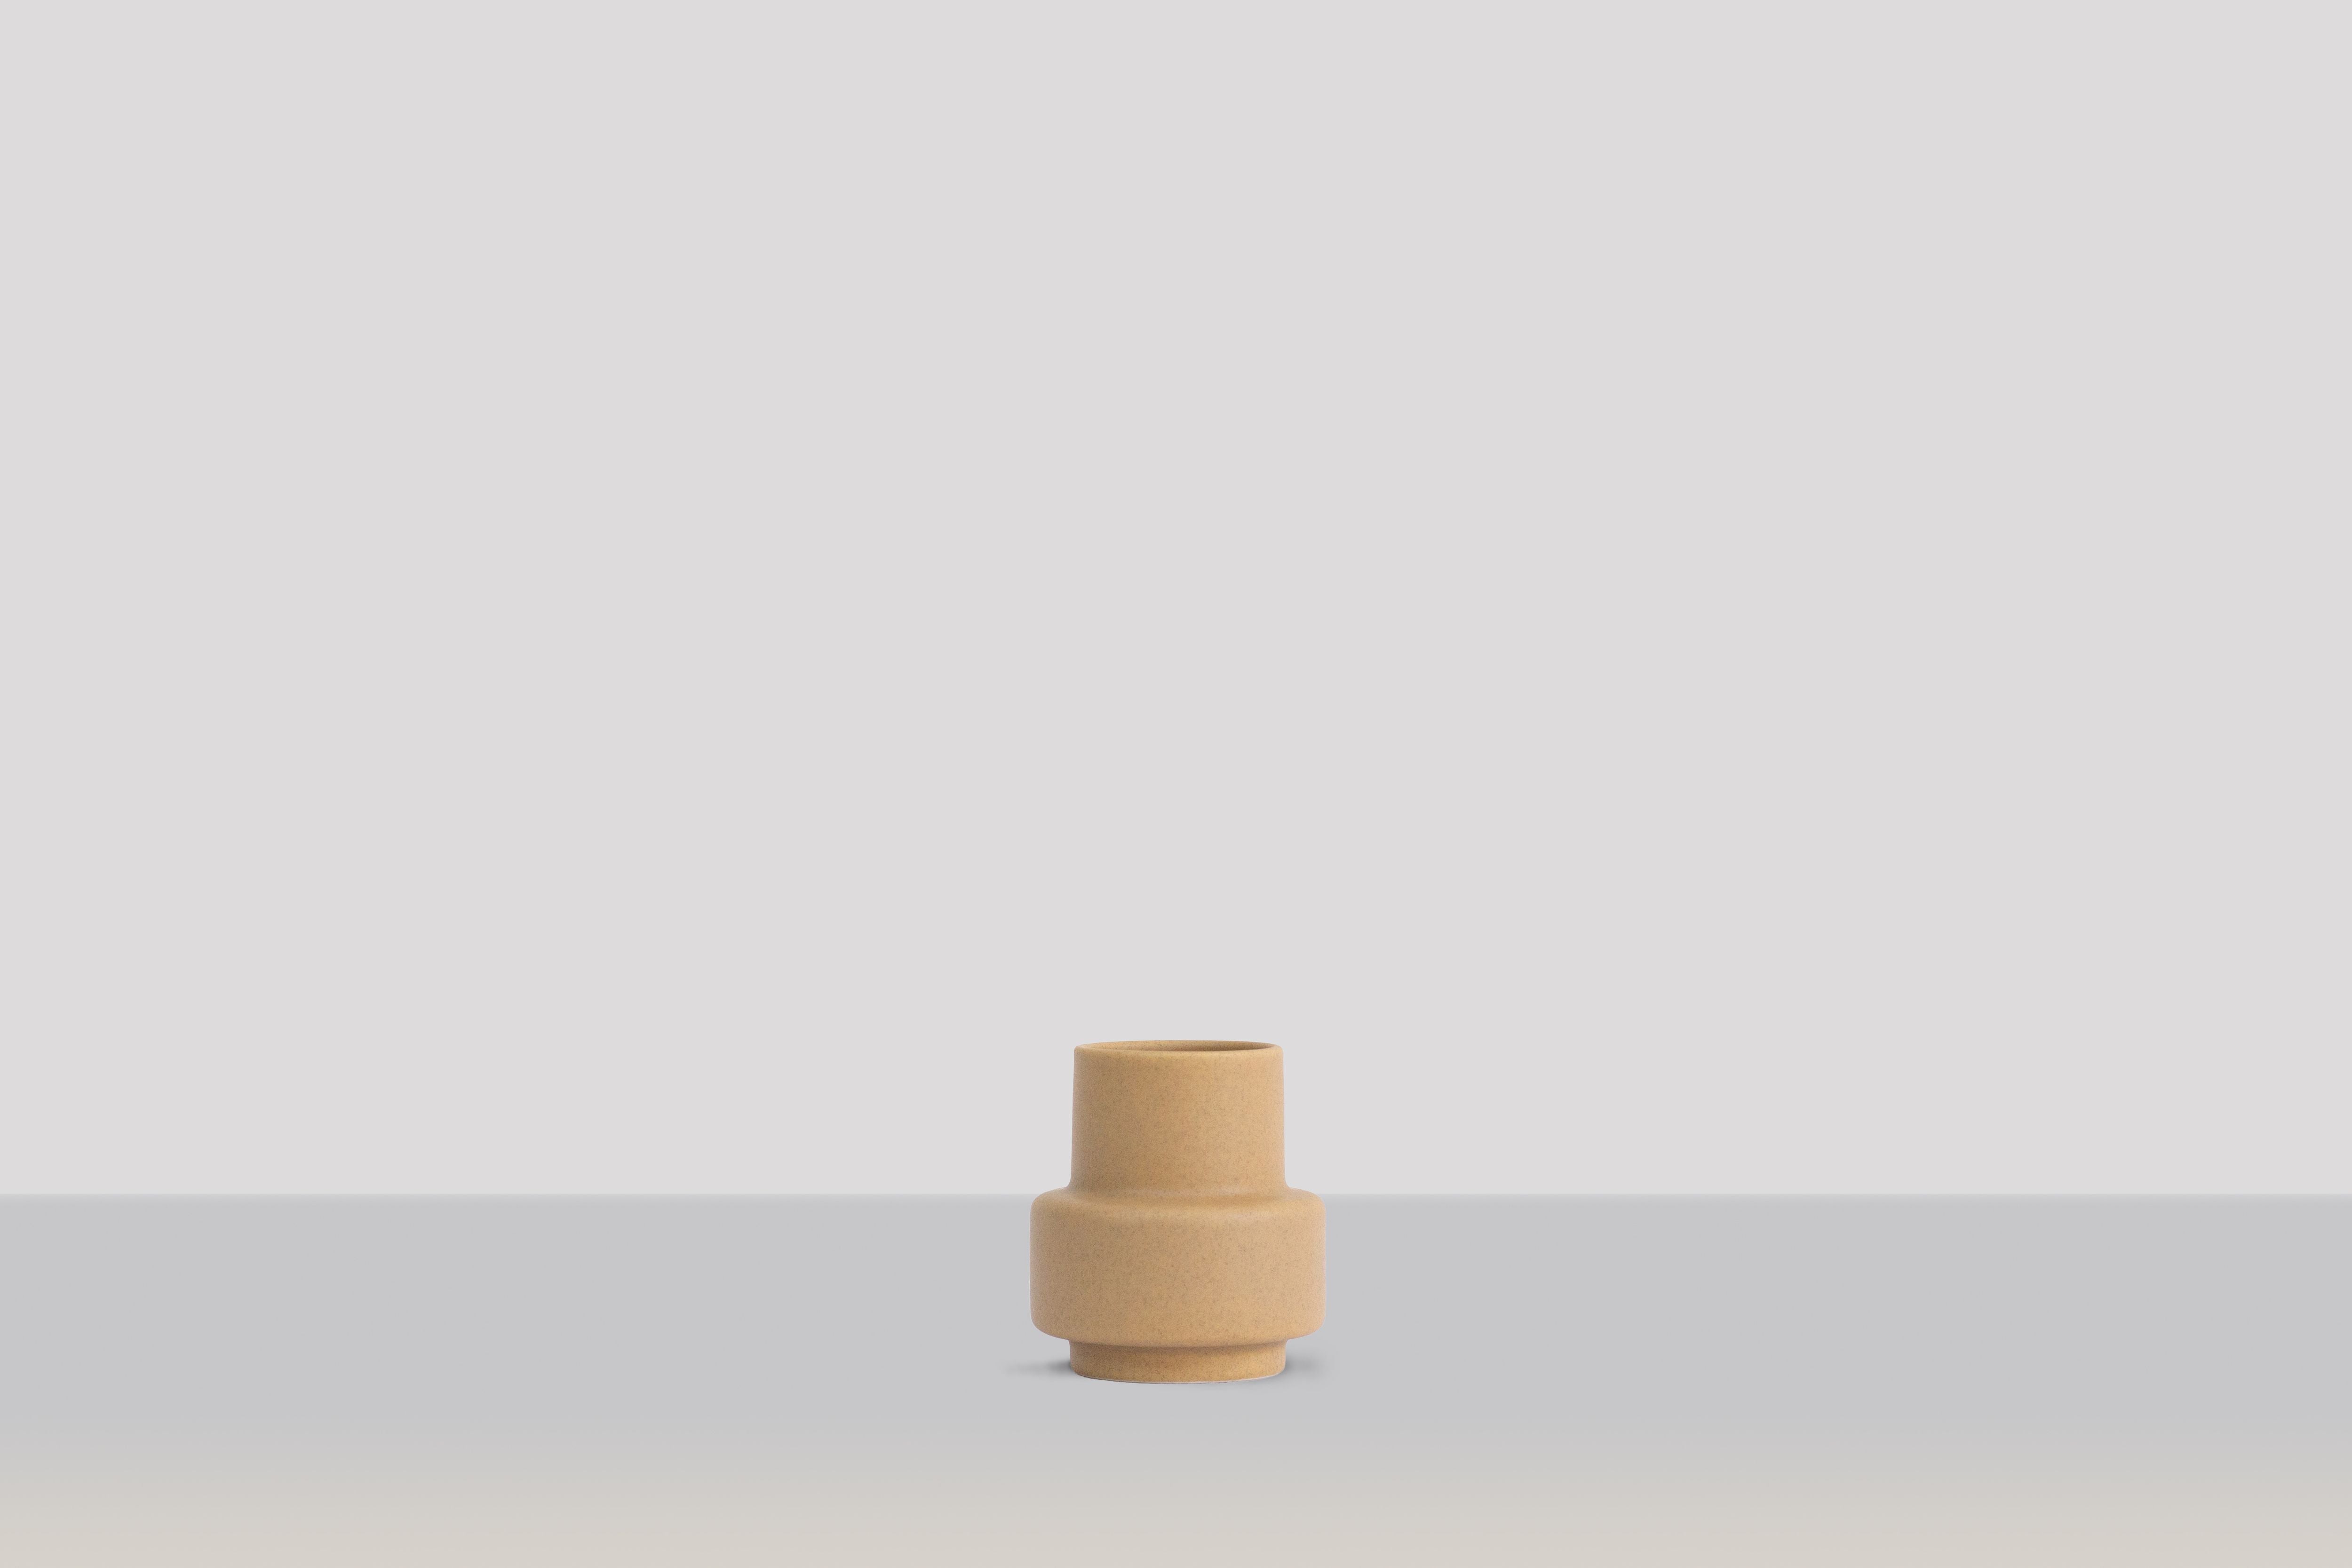 RO -Kollektion Hurrikan Keramik Vase Small, weicher Ocker